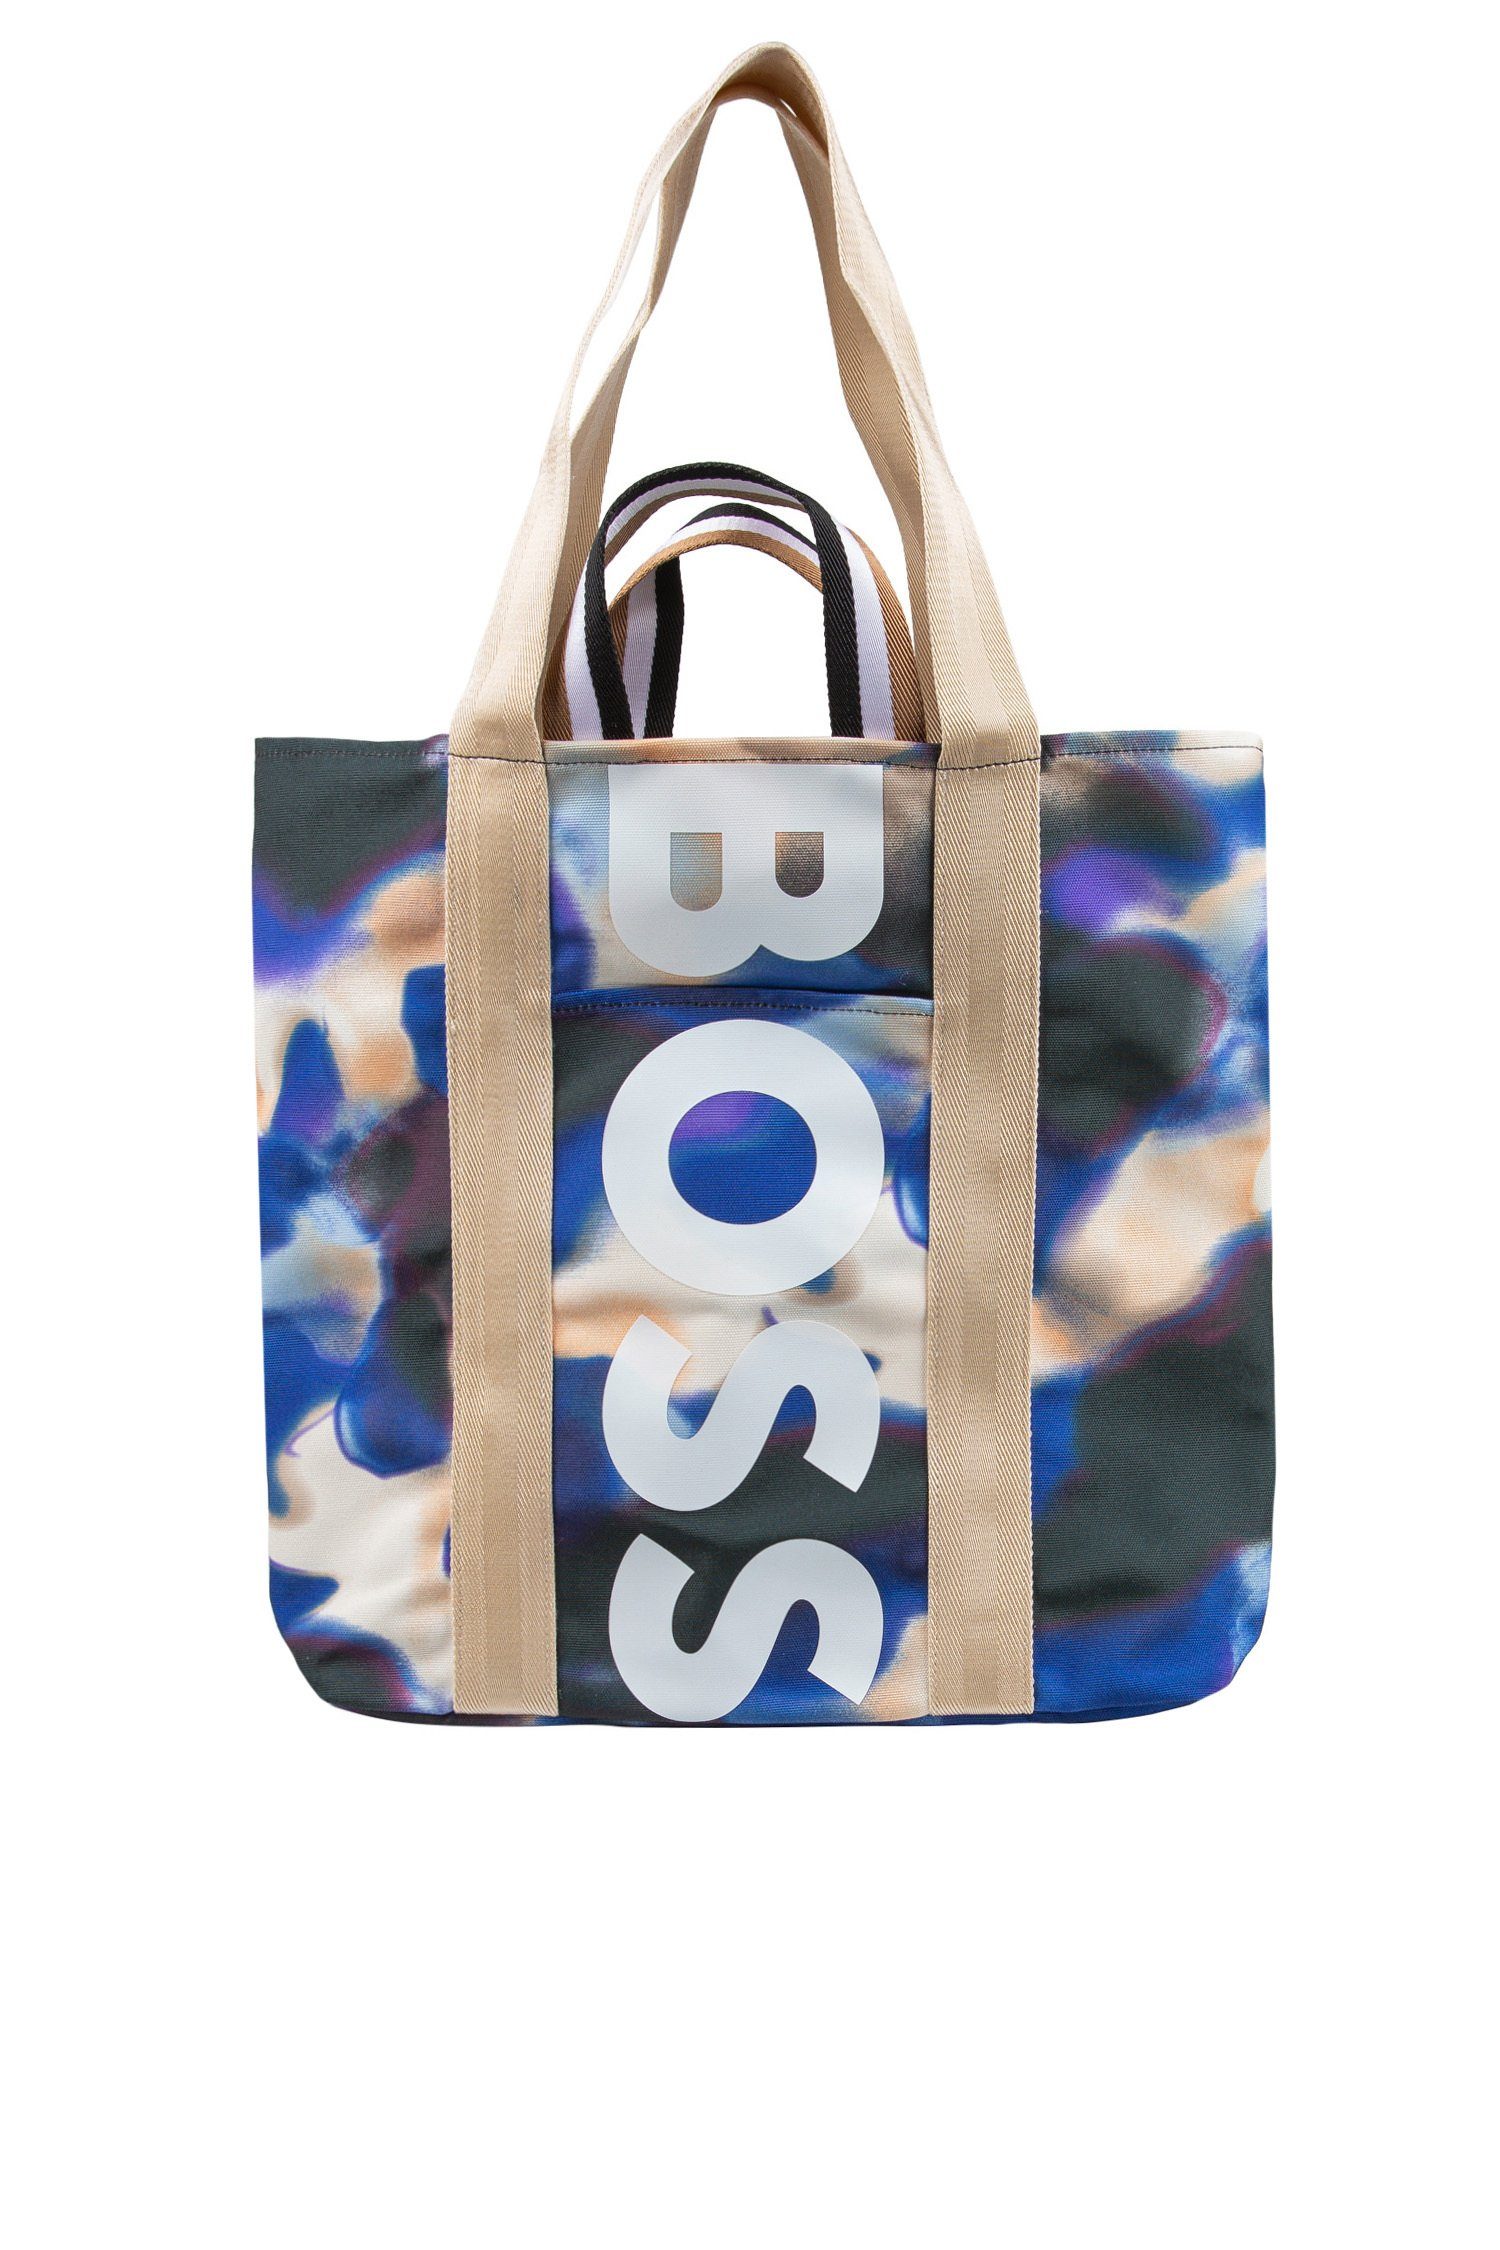 HUGO BOSS Shopper Bag Deva (keine Angabe, keine Angabe)